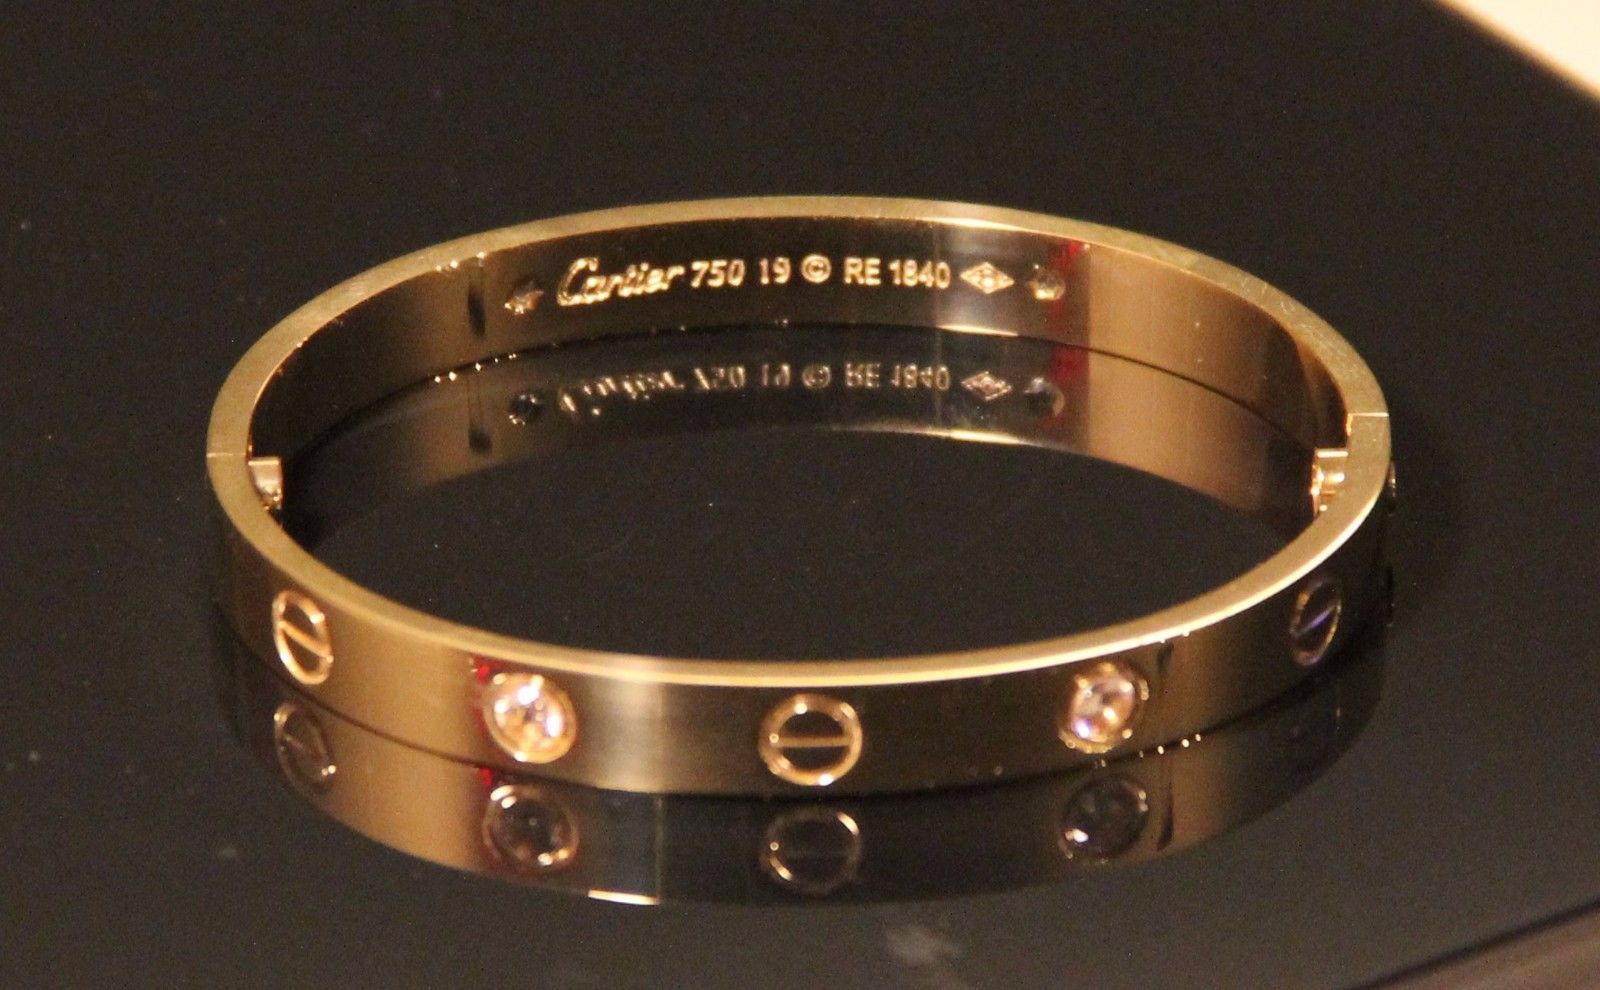 cartier love bracelet 750 20 re 1840